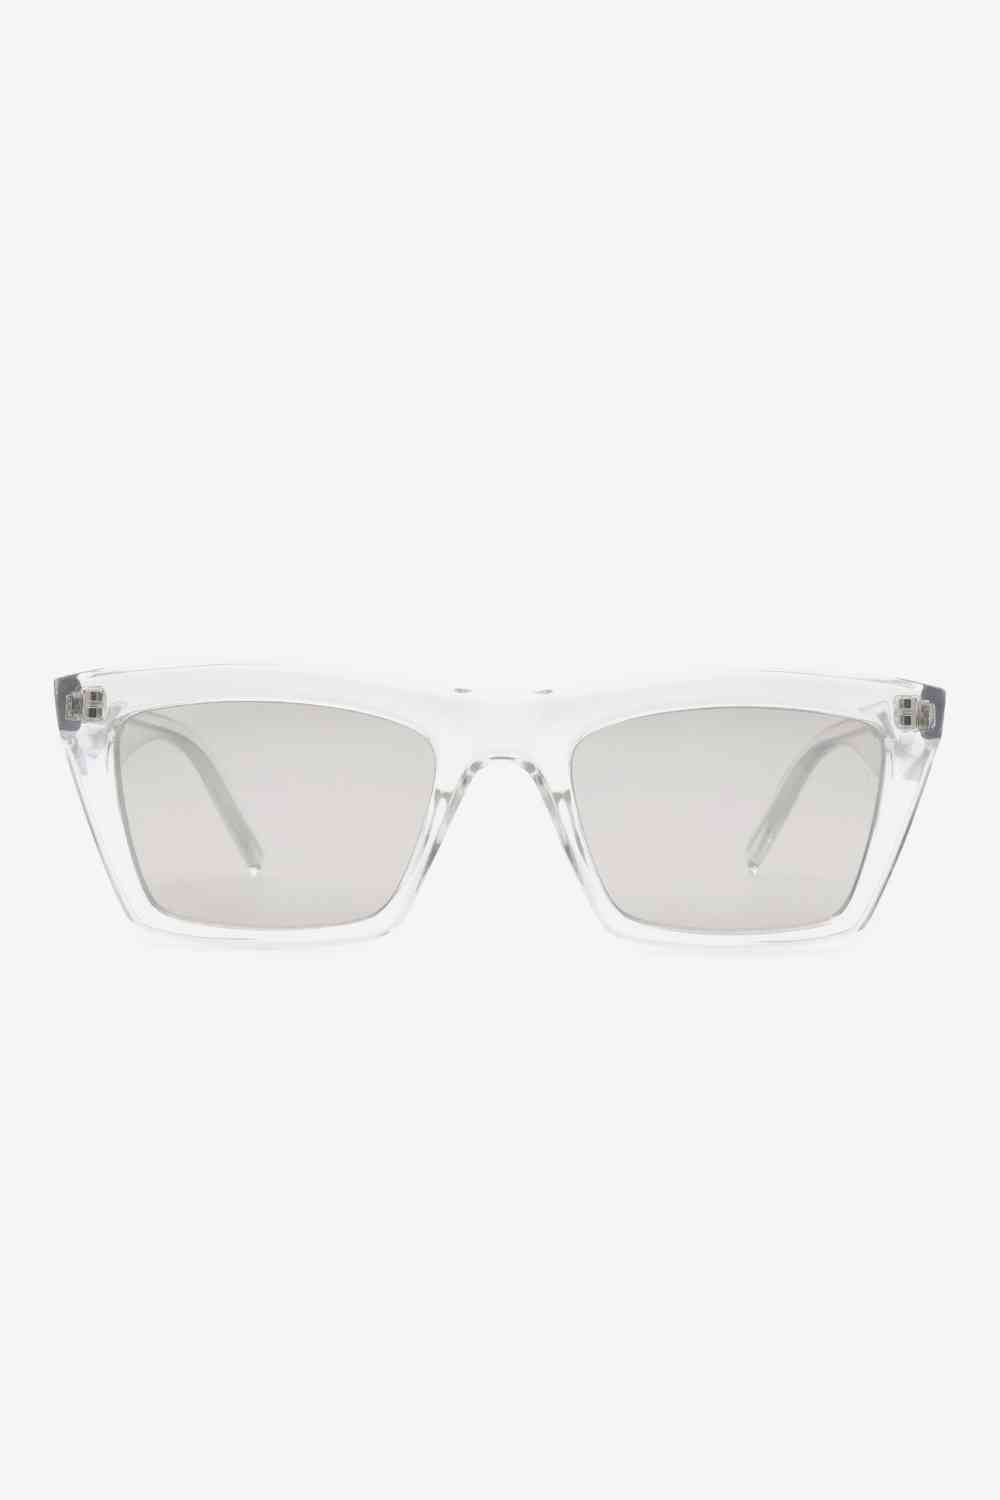 rectangle sunglasses frames